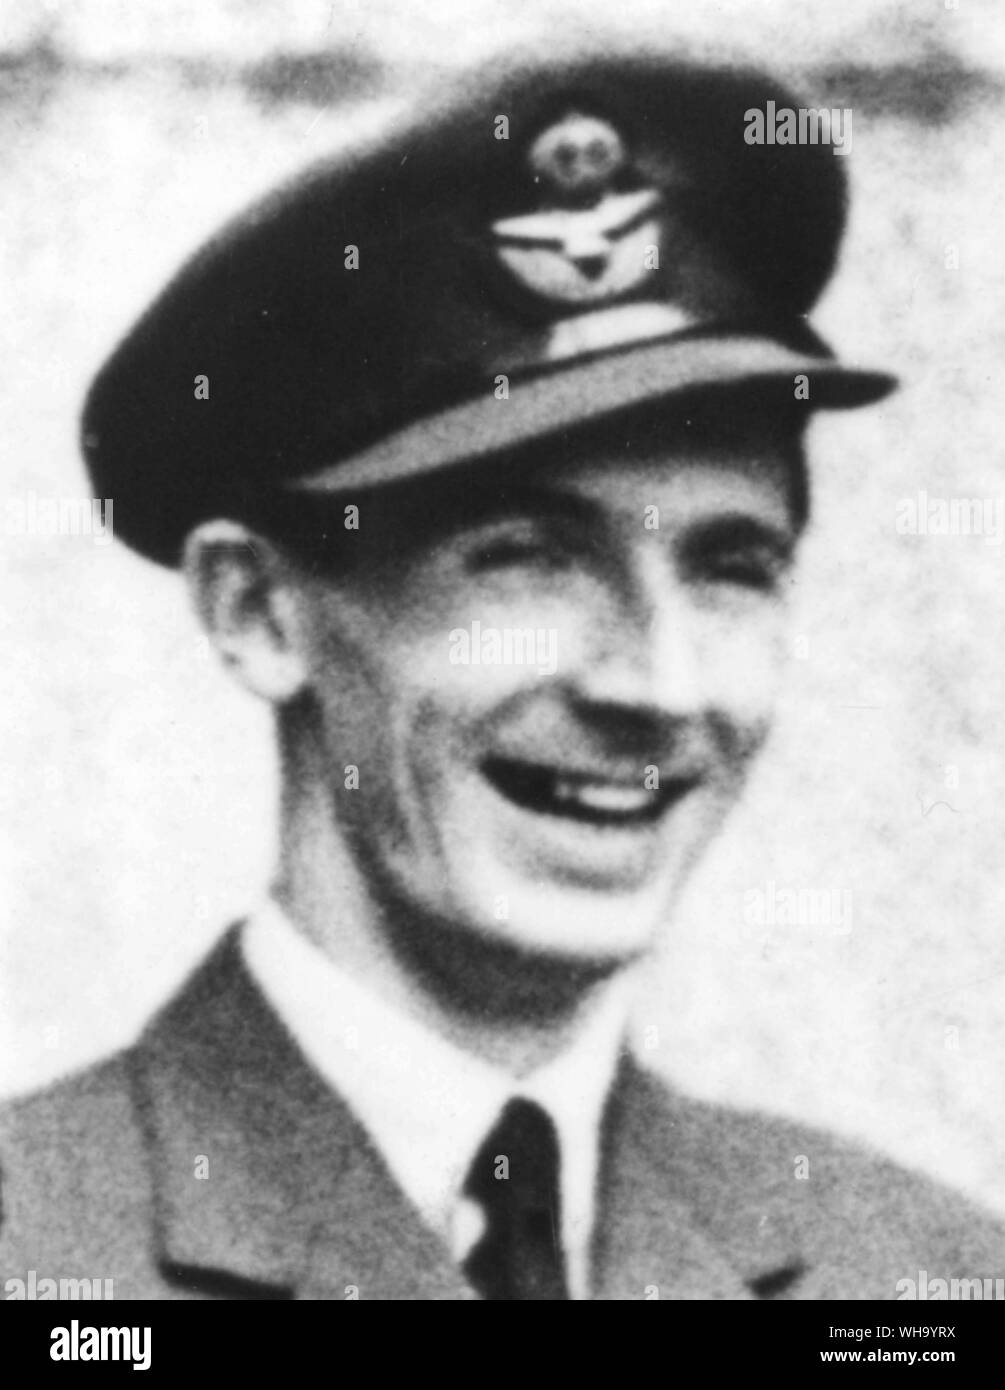 WW2/Battle of Britain: RAF pilot. Stock Photo